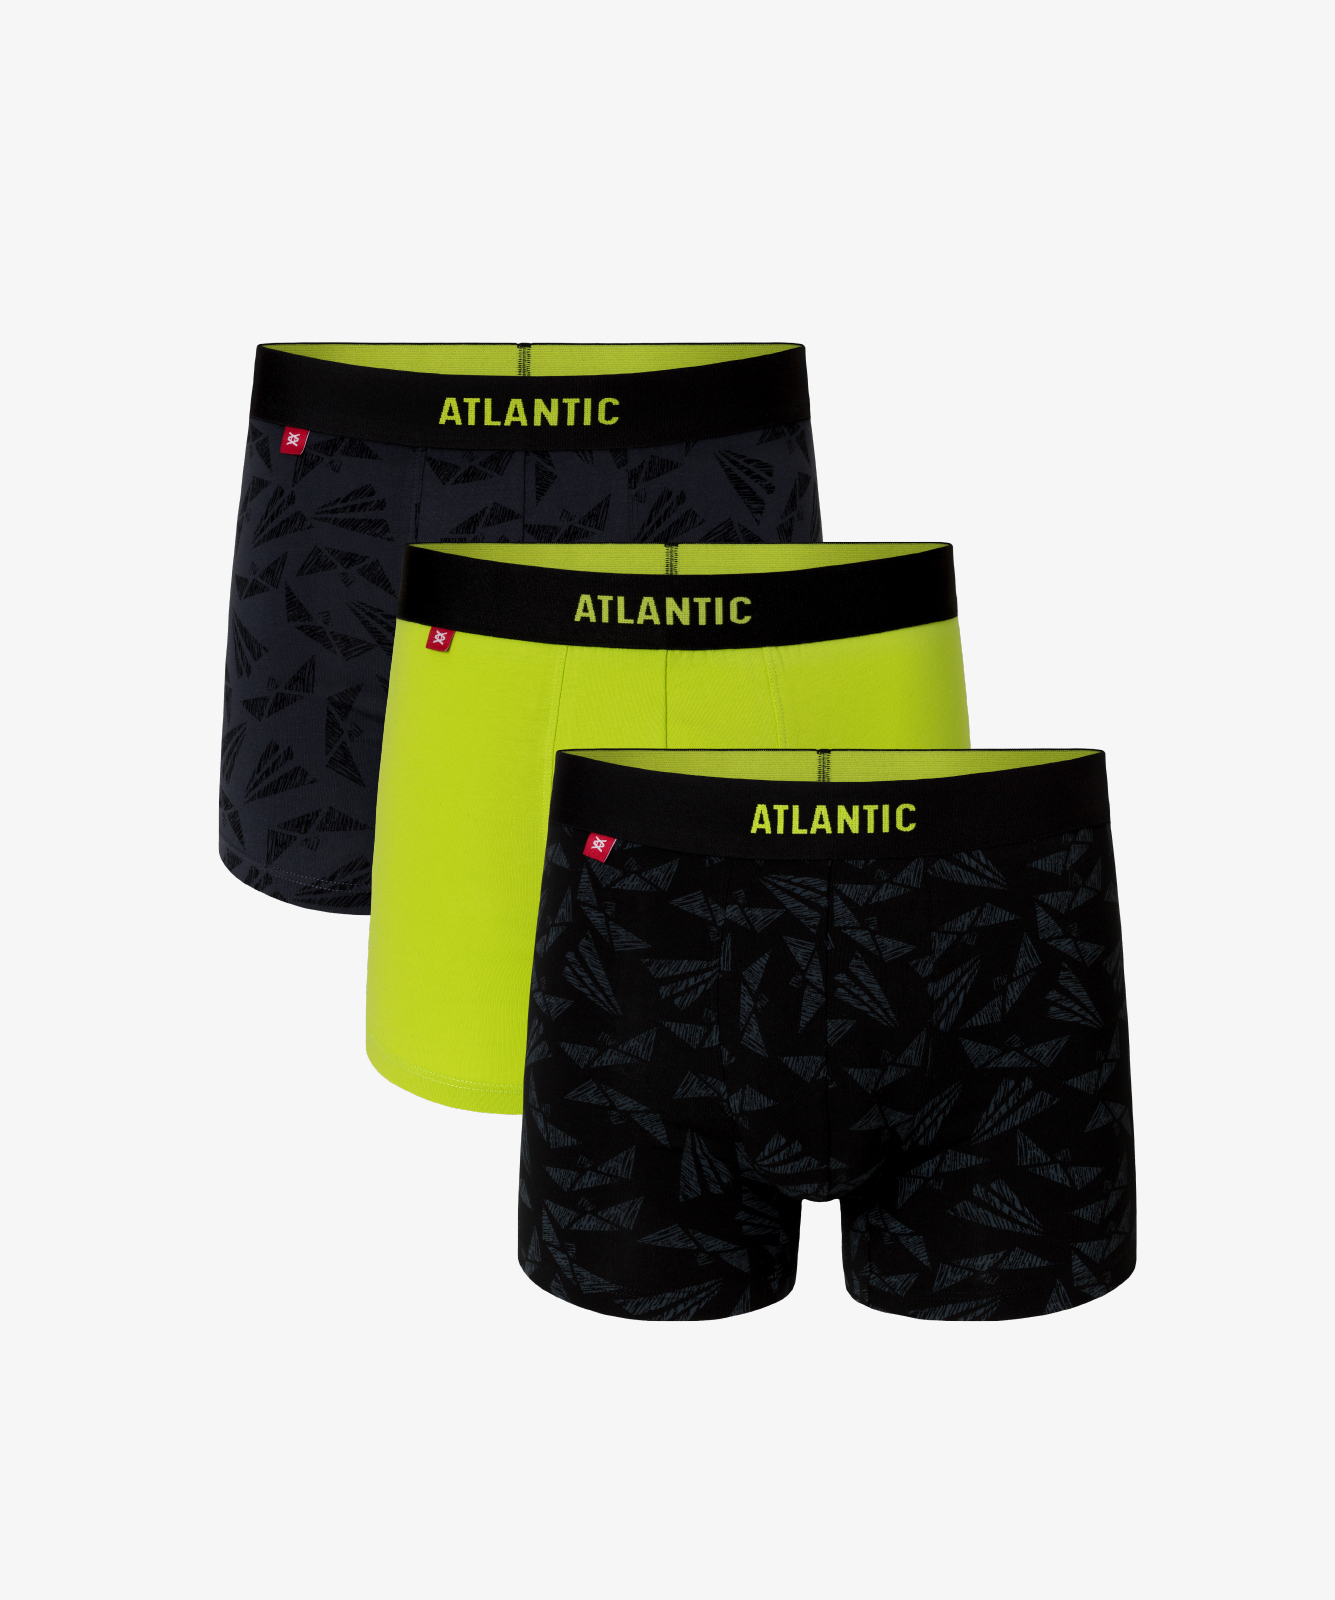 3-PACK Men's boxers ATLANTIC graphite/lime/black